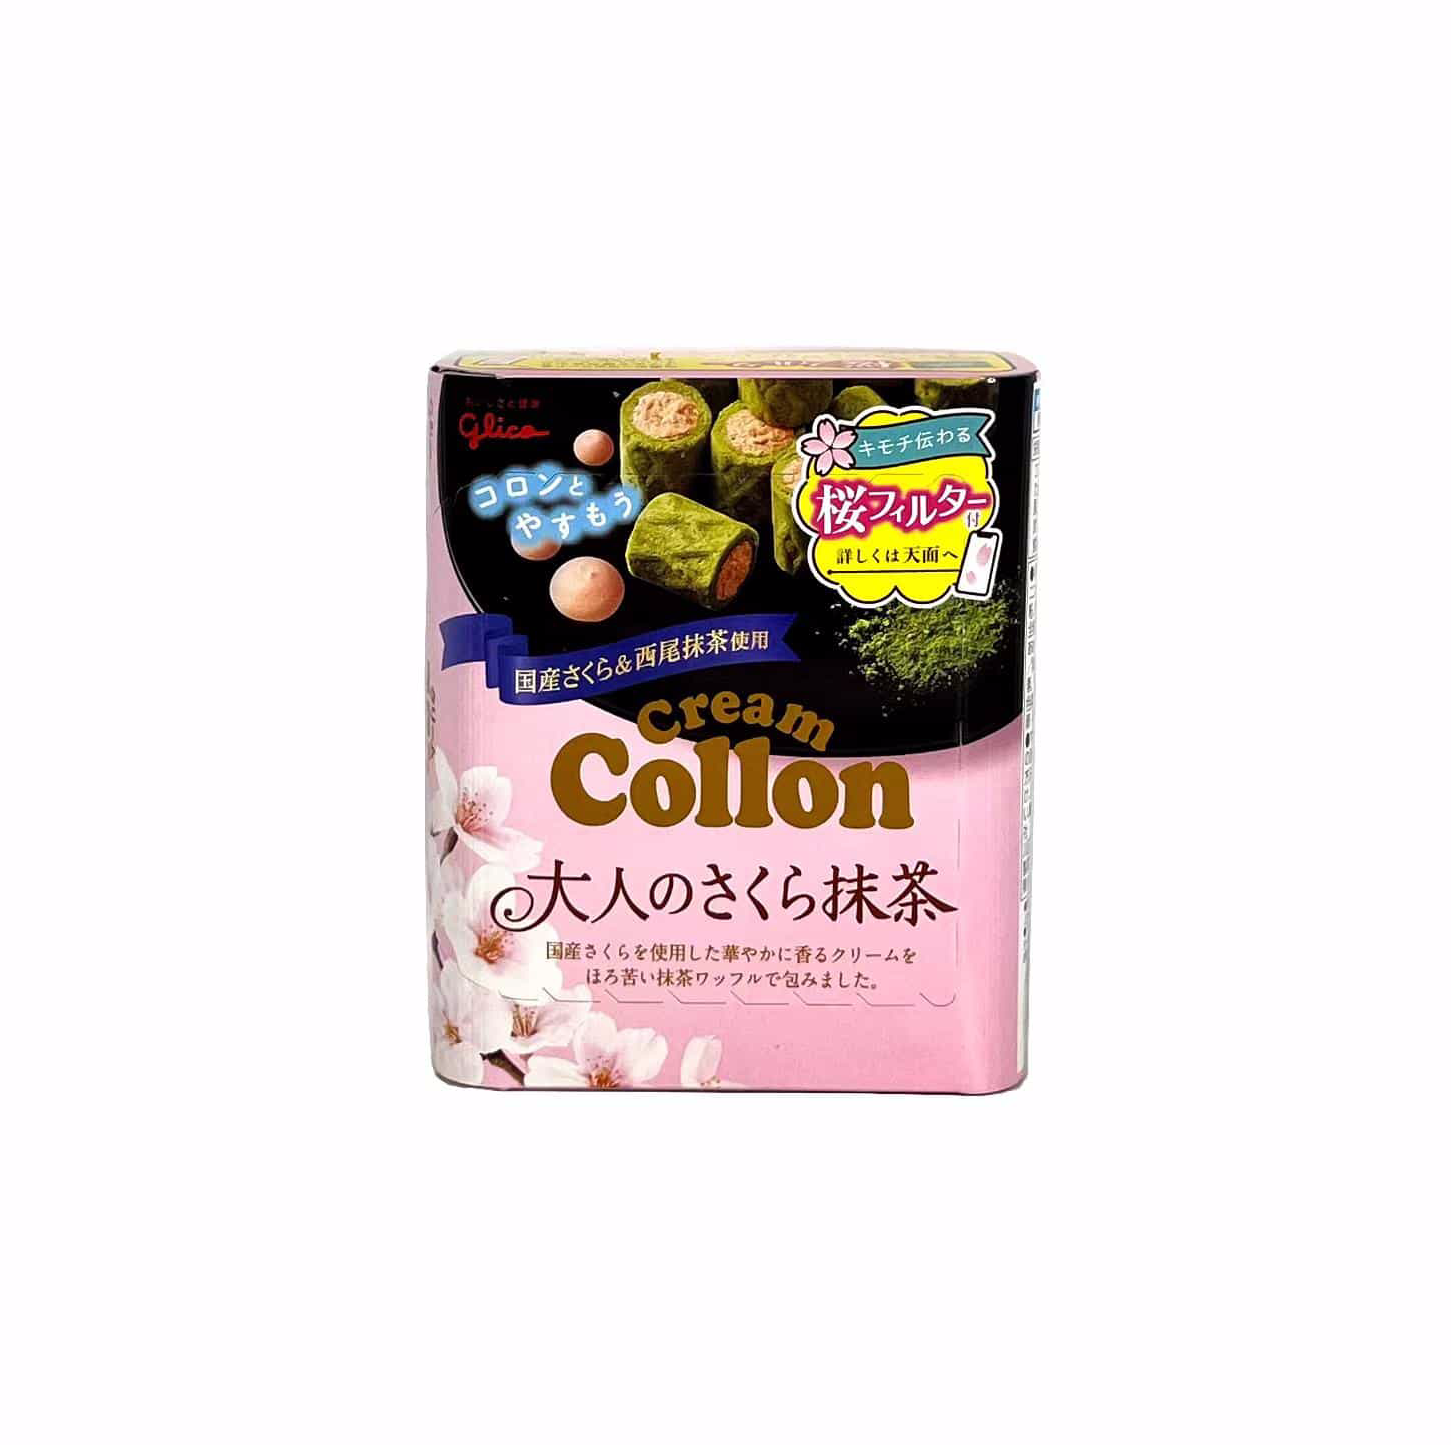 Cream Collon Biscuit Roll Sakura Matcha Smak 48g Glico Japan